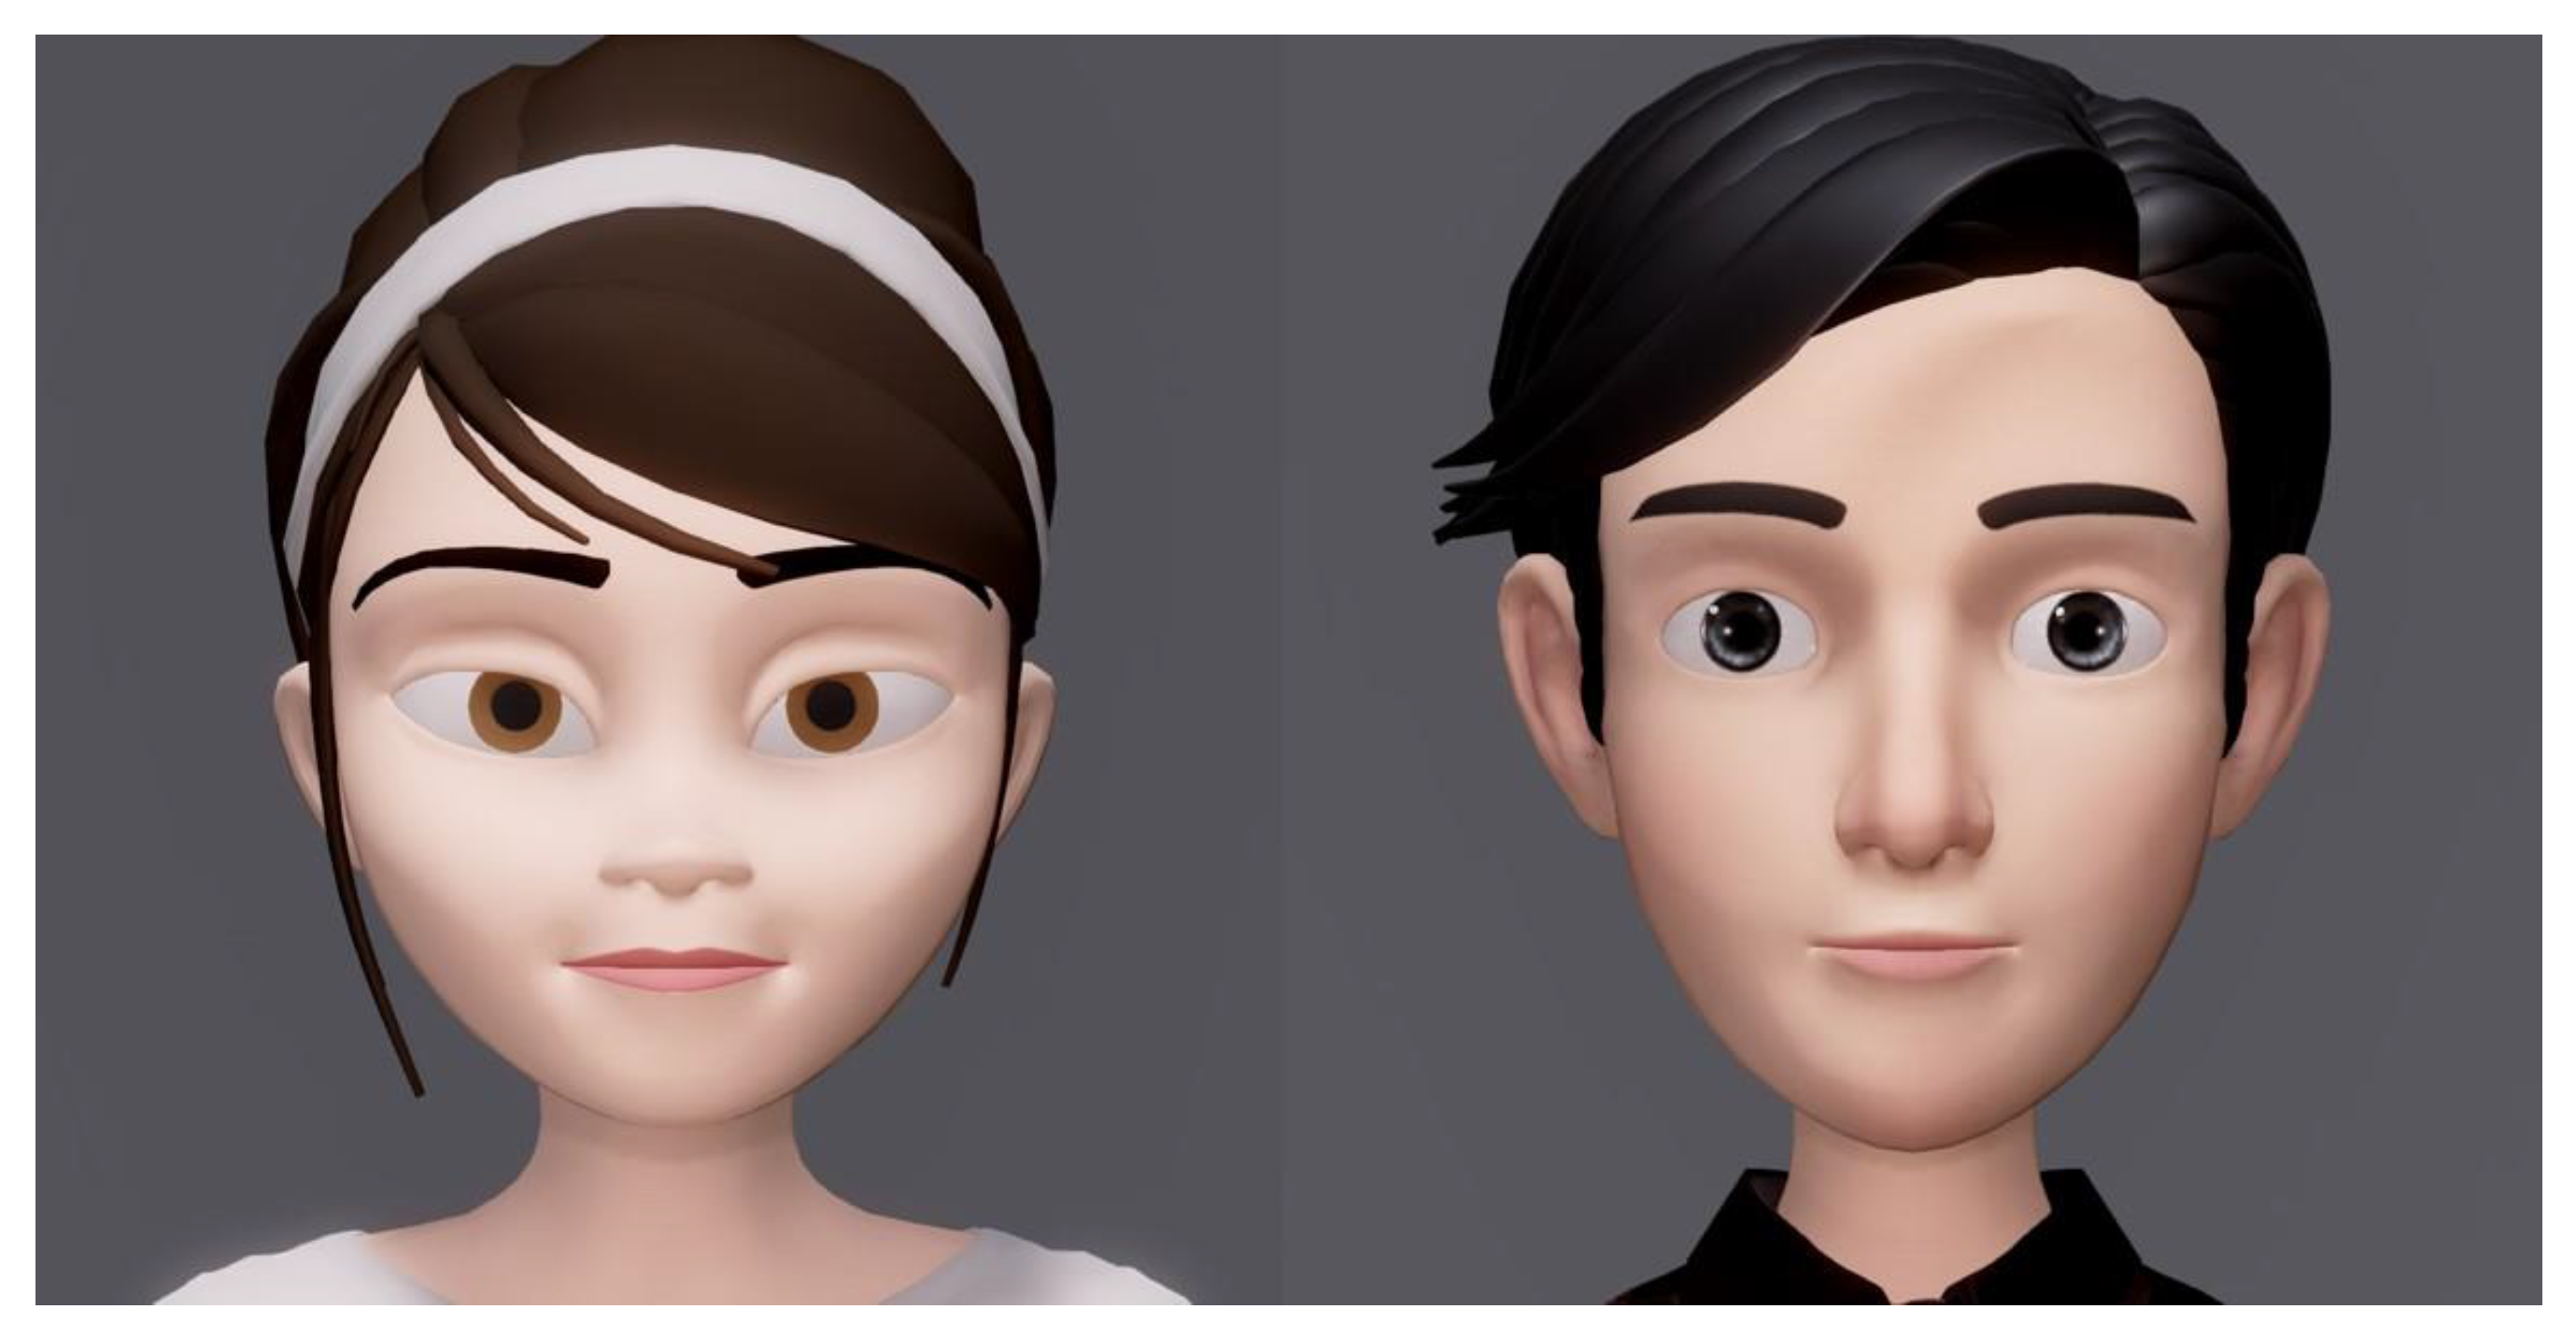 3D Virtual avatar and Facial Animation Software